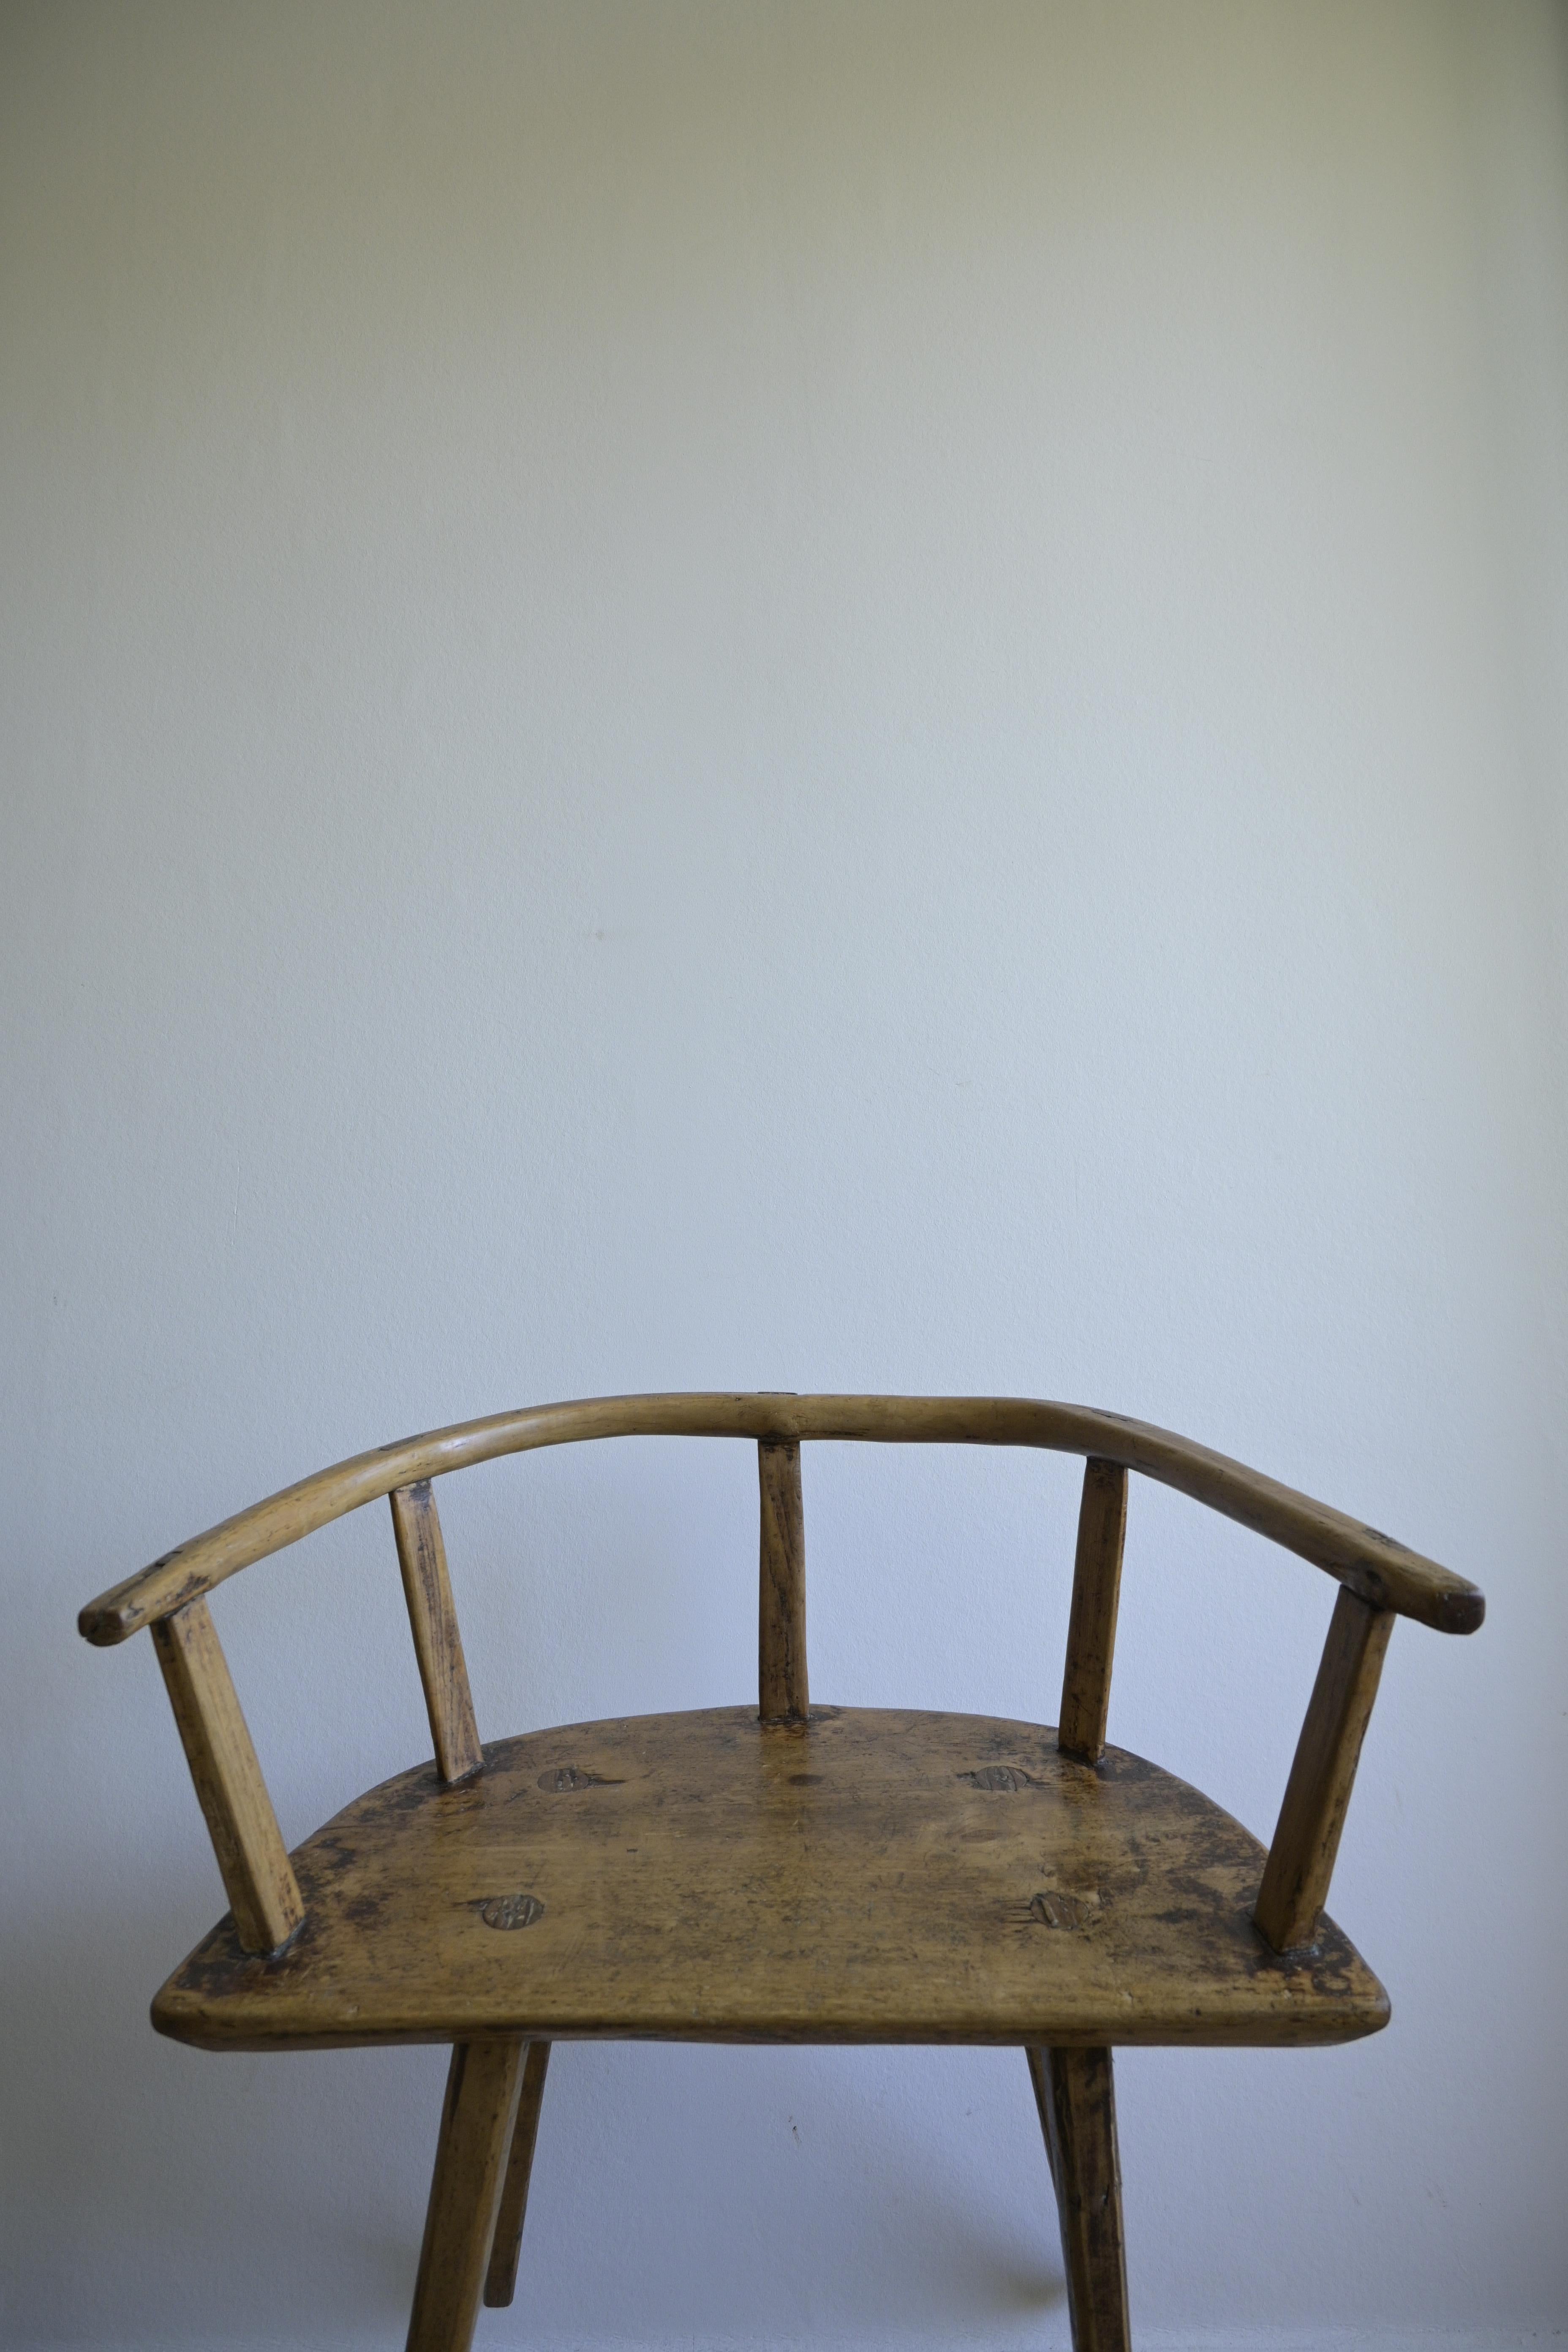 Hand-Carved Norwegian Folk Art Chair 'Spinnastol' circa 1850 For Sale